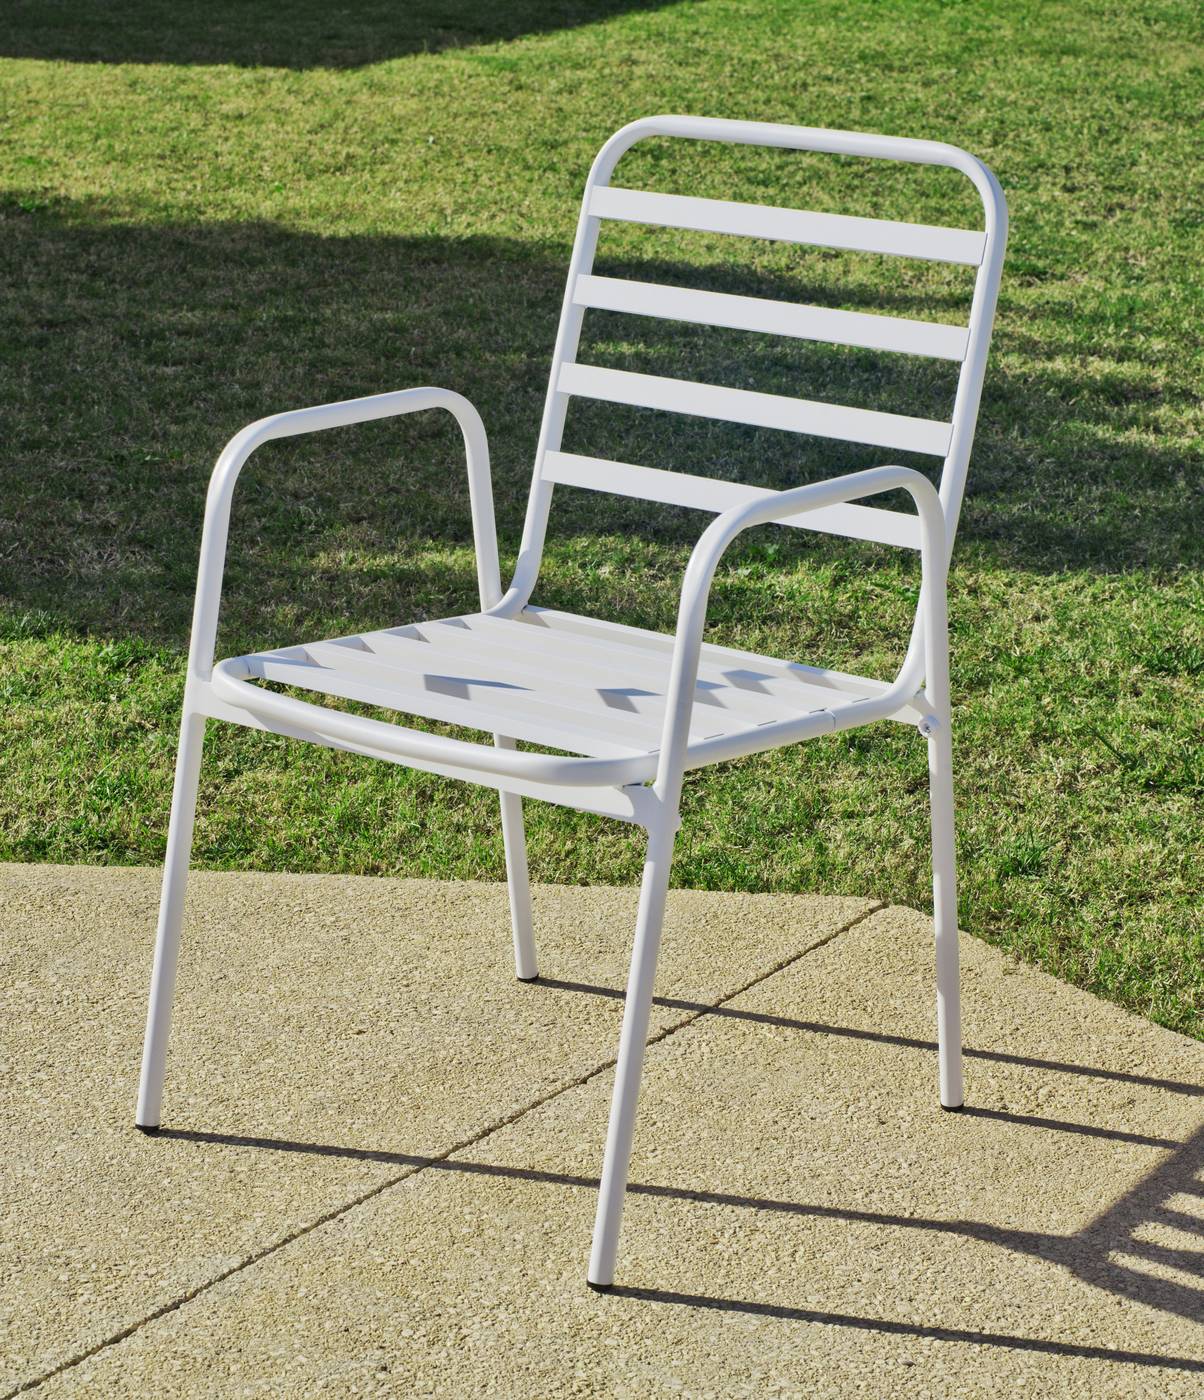 Set Aluminio Margot-Maxim 80-4 - Conjunto aluminio de color blanco: mesa cuadrada 80 cm. con tablero de heverzaplus y 4 sillones apilables de aluminio